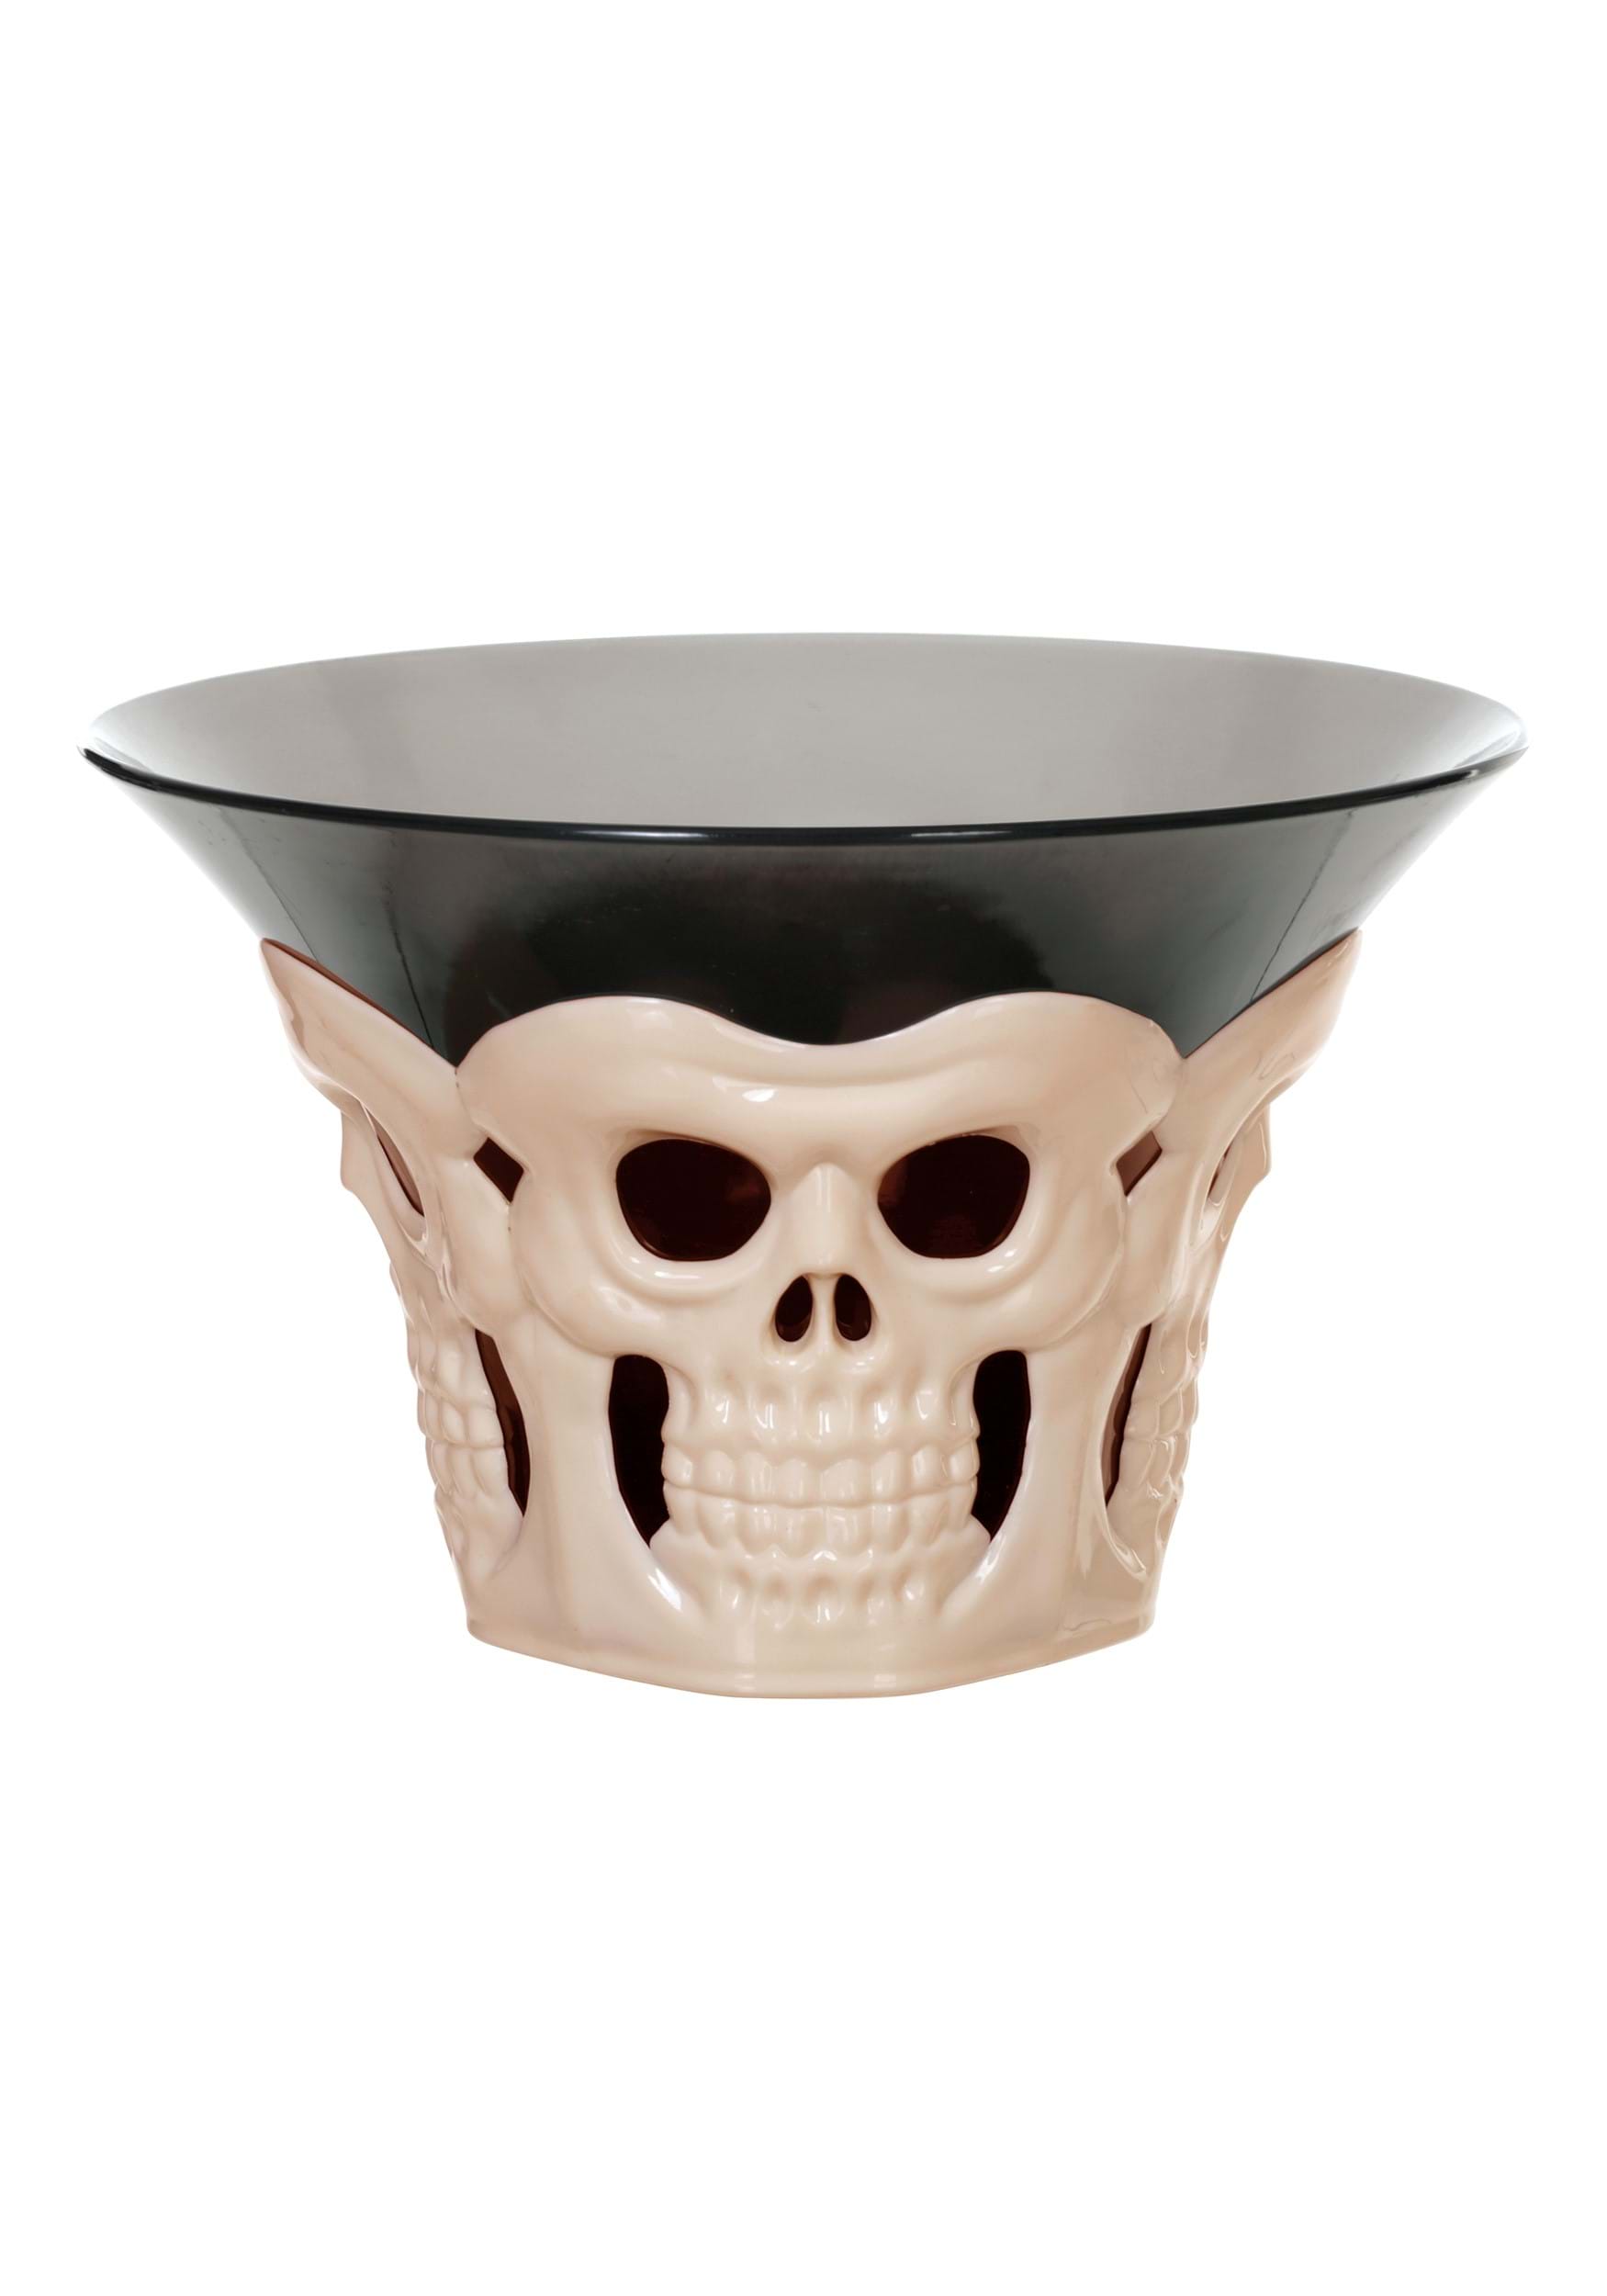 4.5 Inch Skull Candy Dish Decoration | Halloween Decor